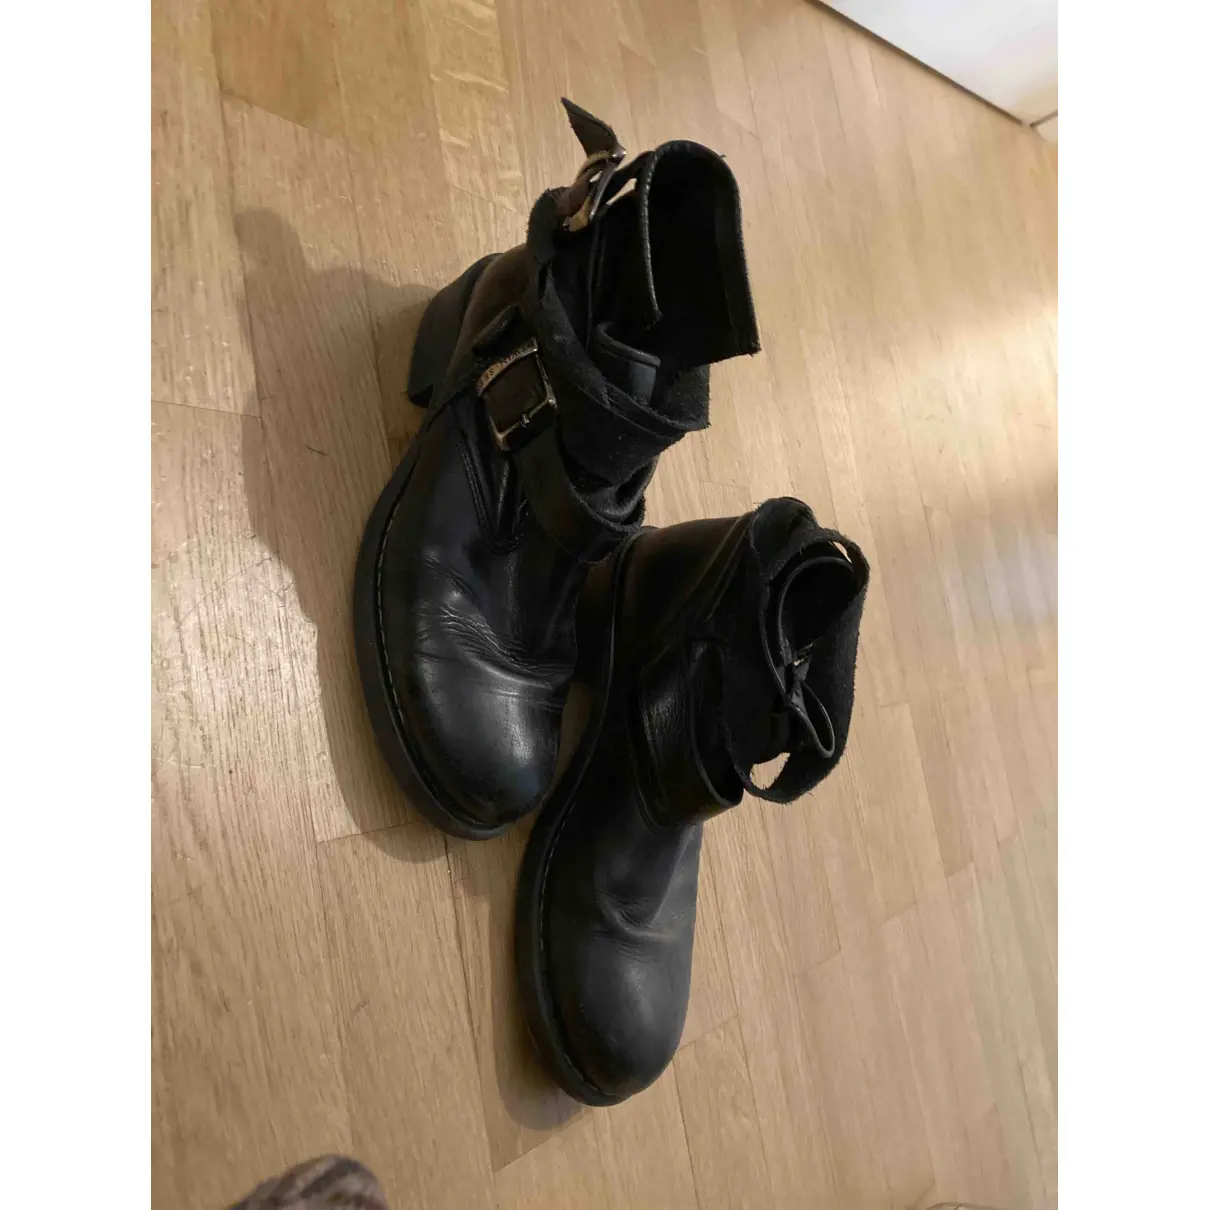 Buy Twinset Leather biker boots online